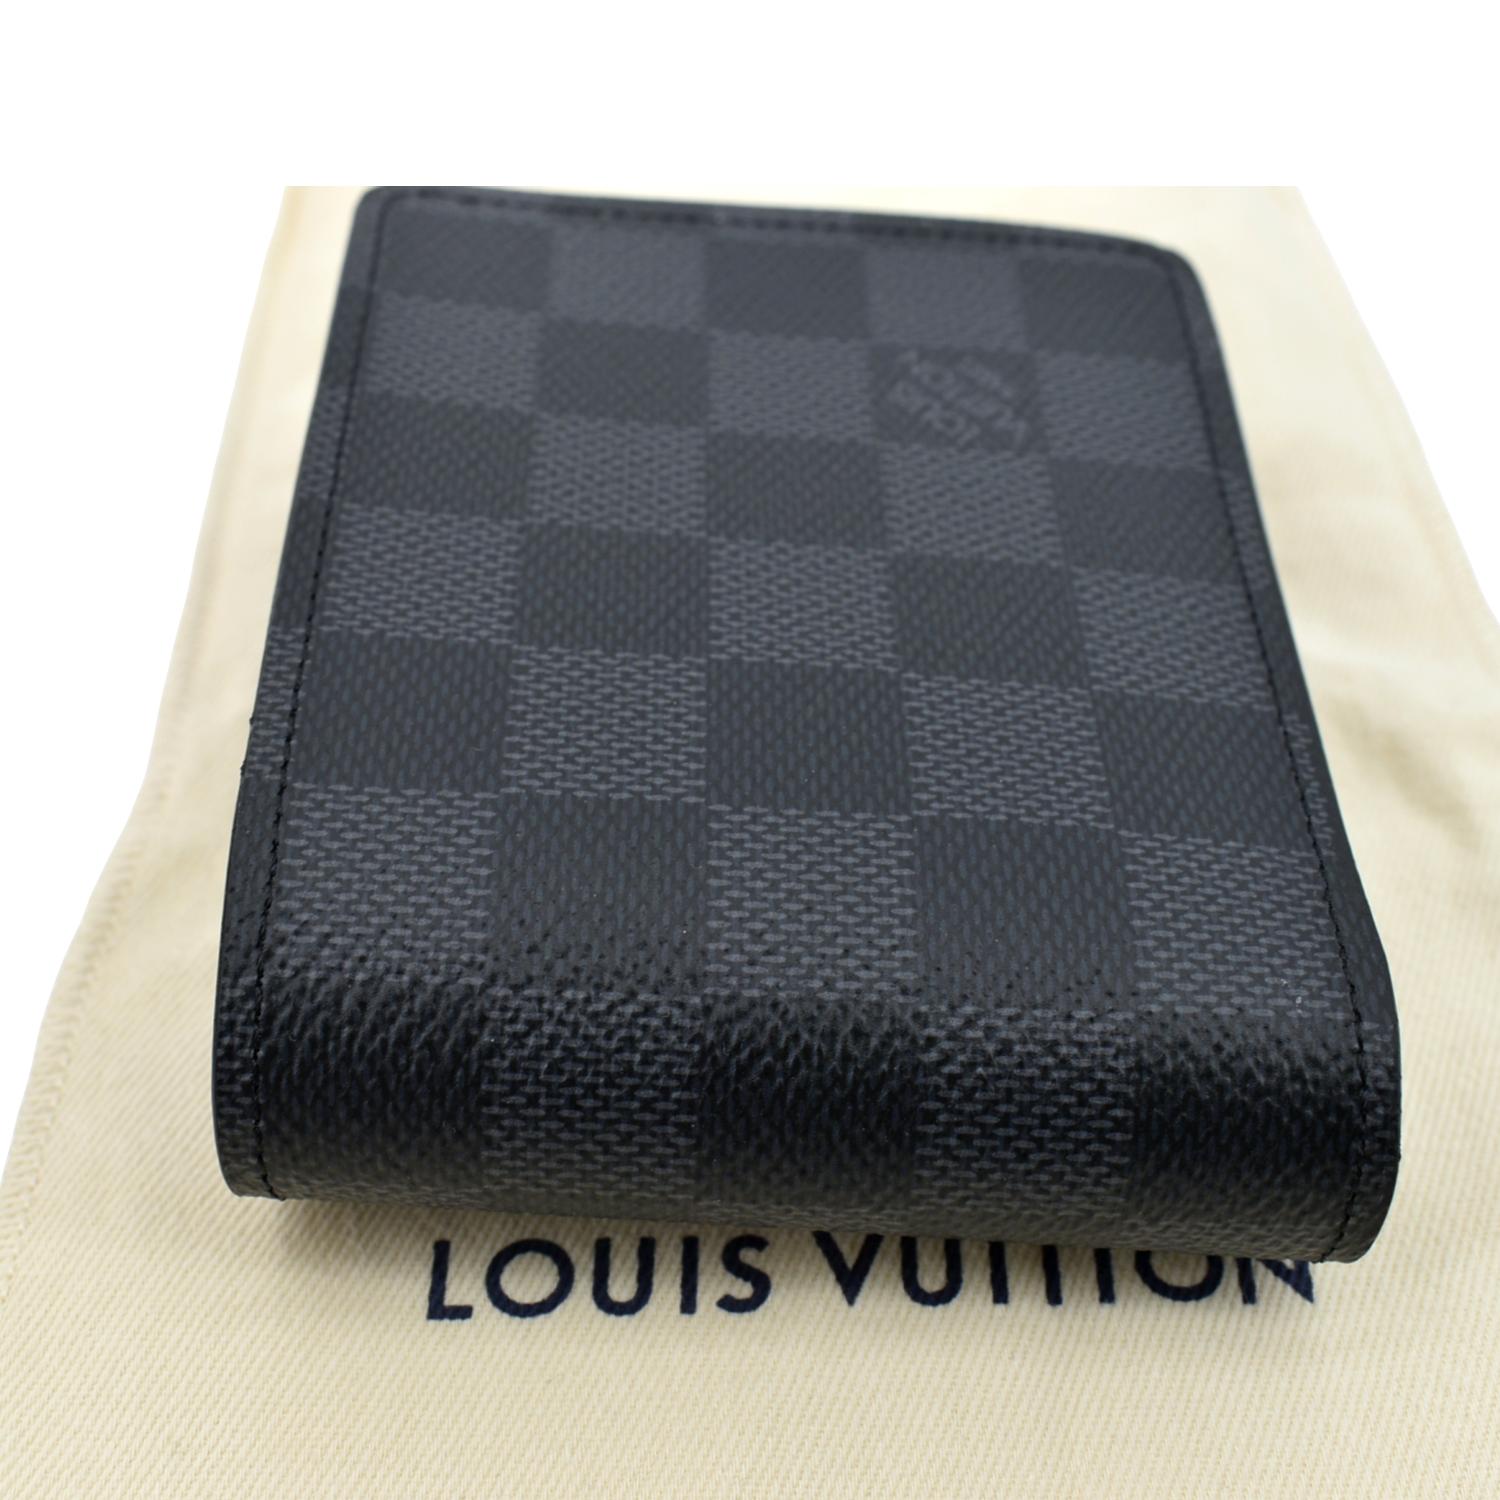 Louis Vuitton Multiple Wallet (Damier Ebene) ReviewWhy It's Not